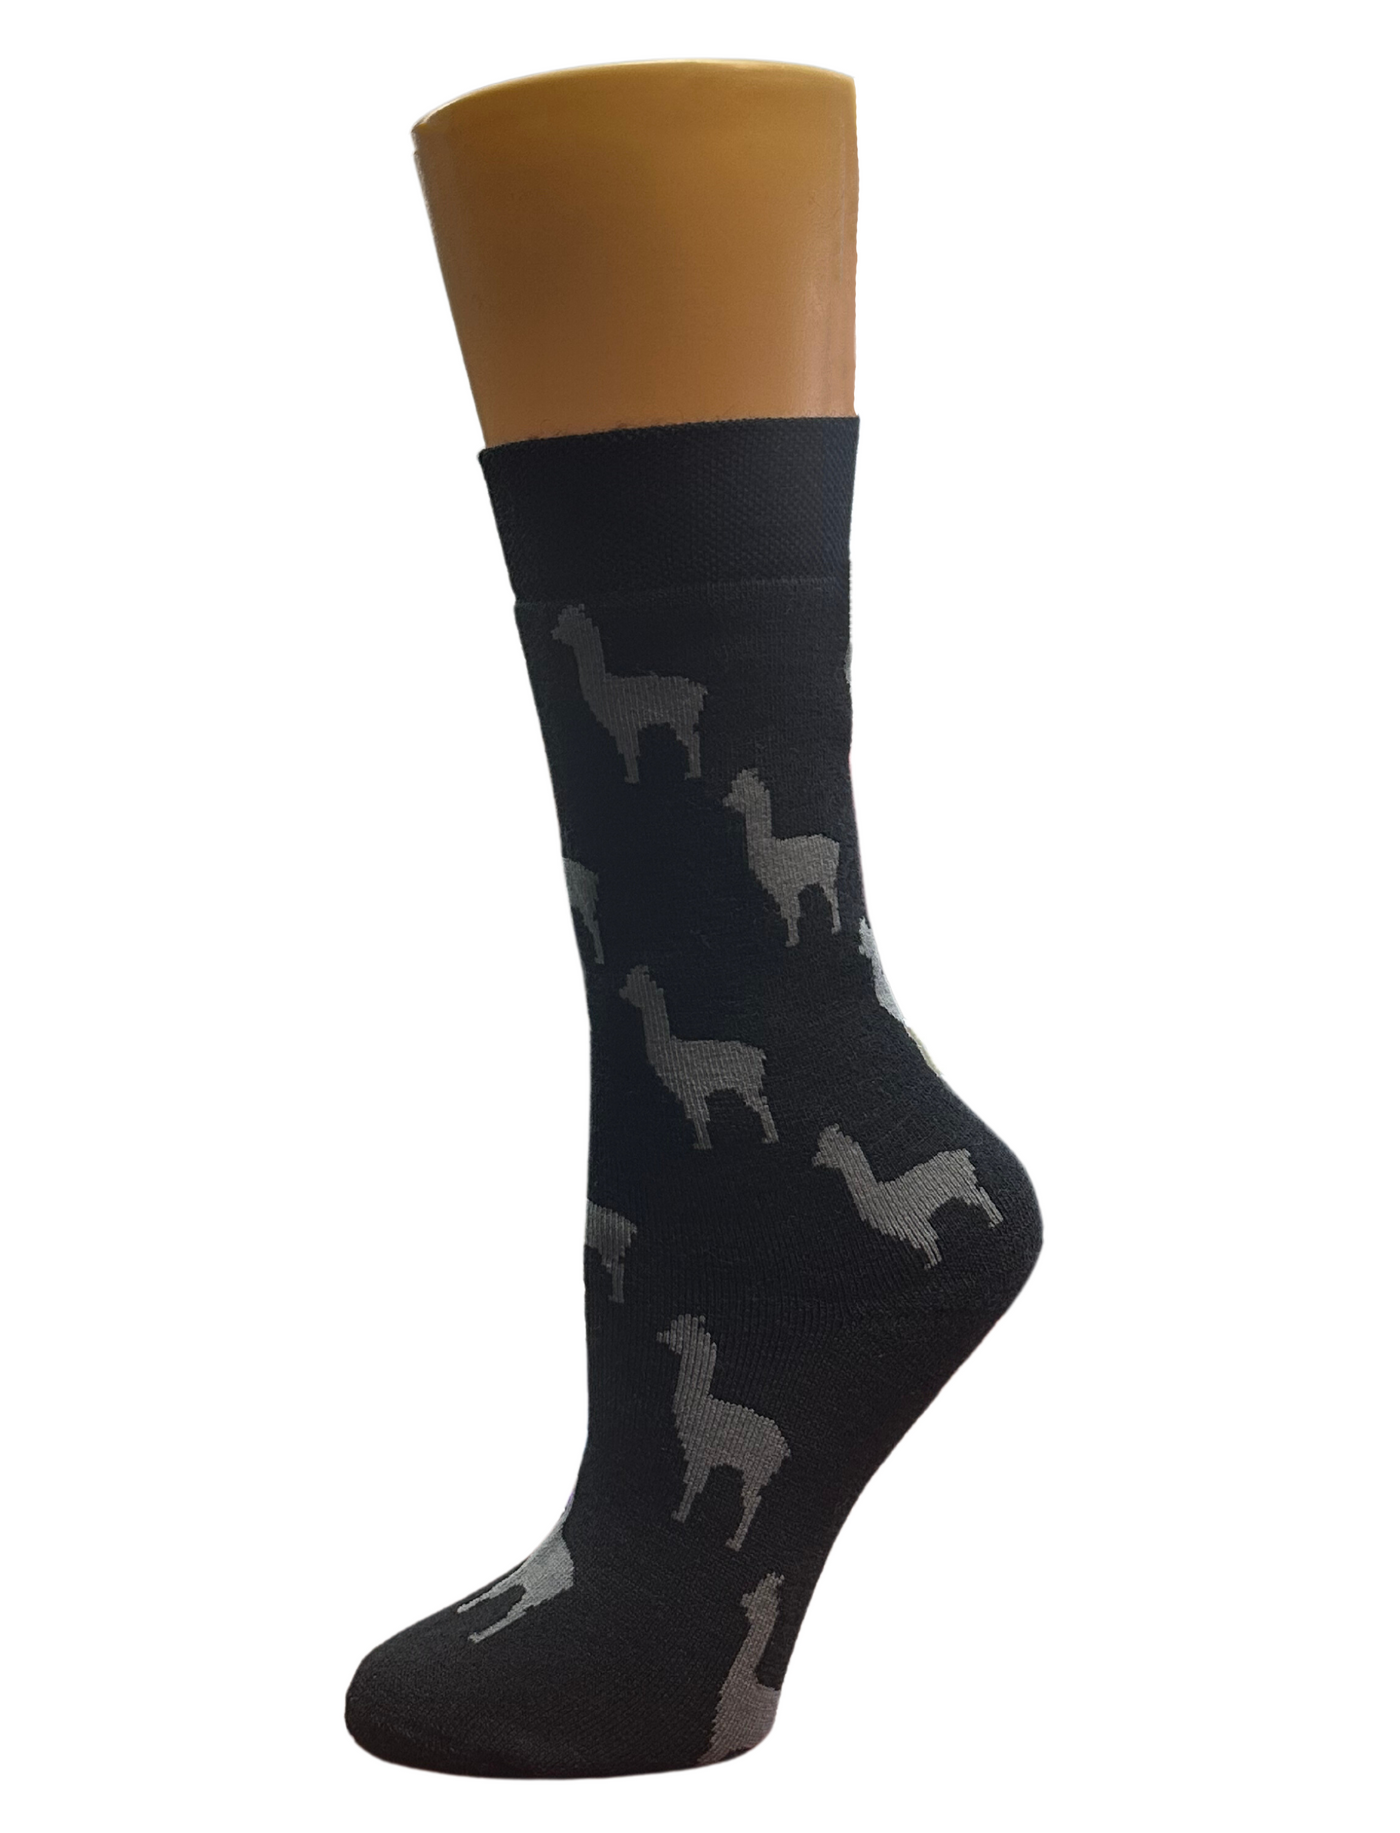 Alpaca Silhouette Socks